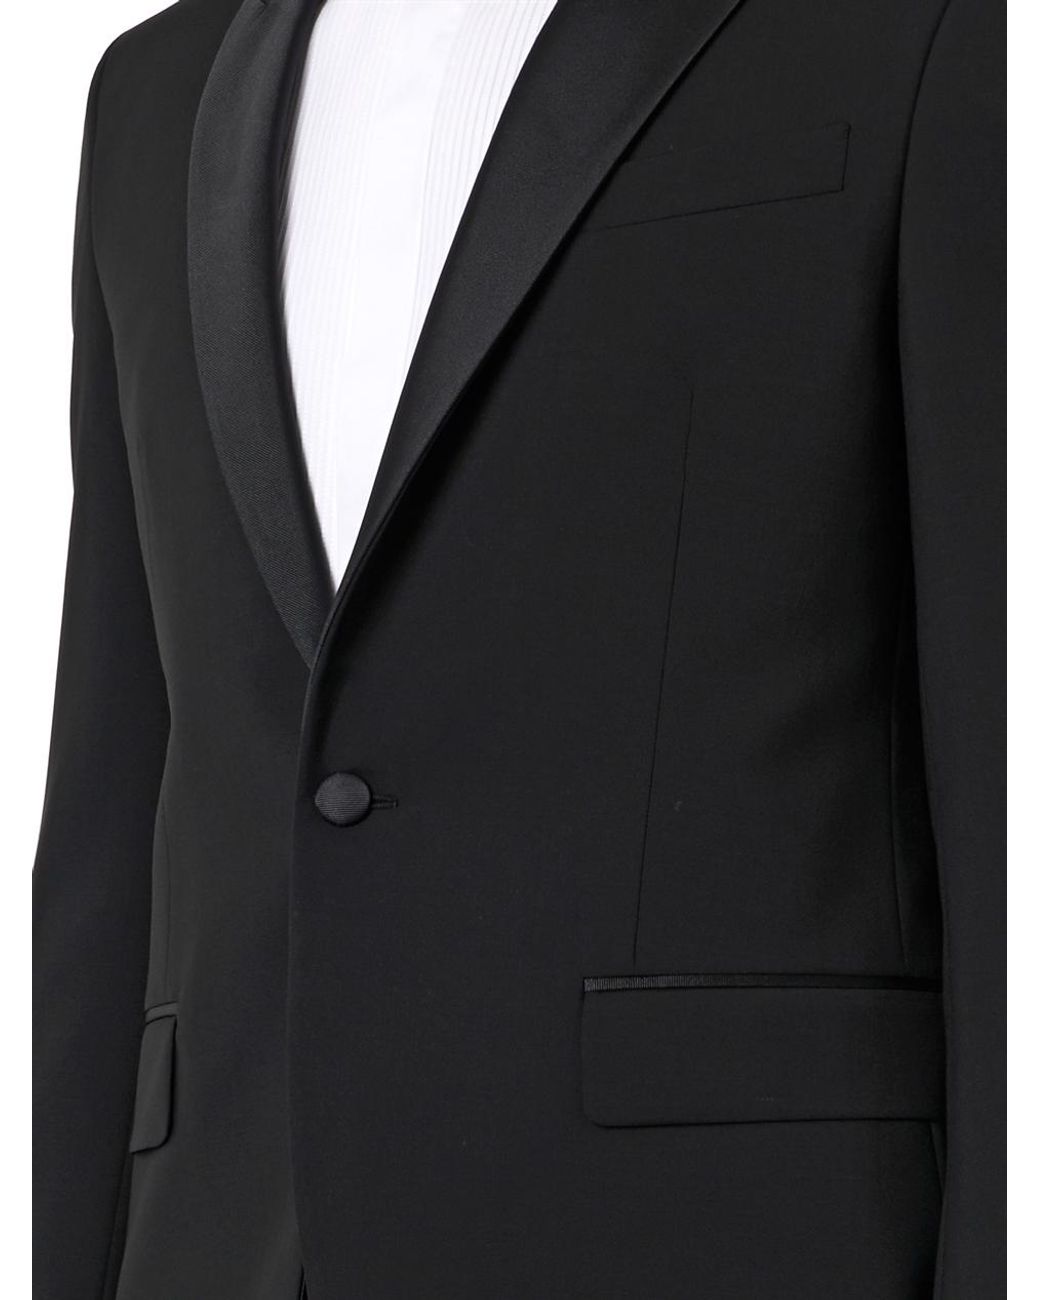 Paul Smith Byard Peak-Lapel Dinner Suit in Black for Men | Lyst